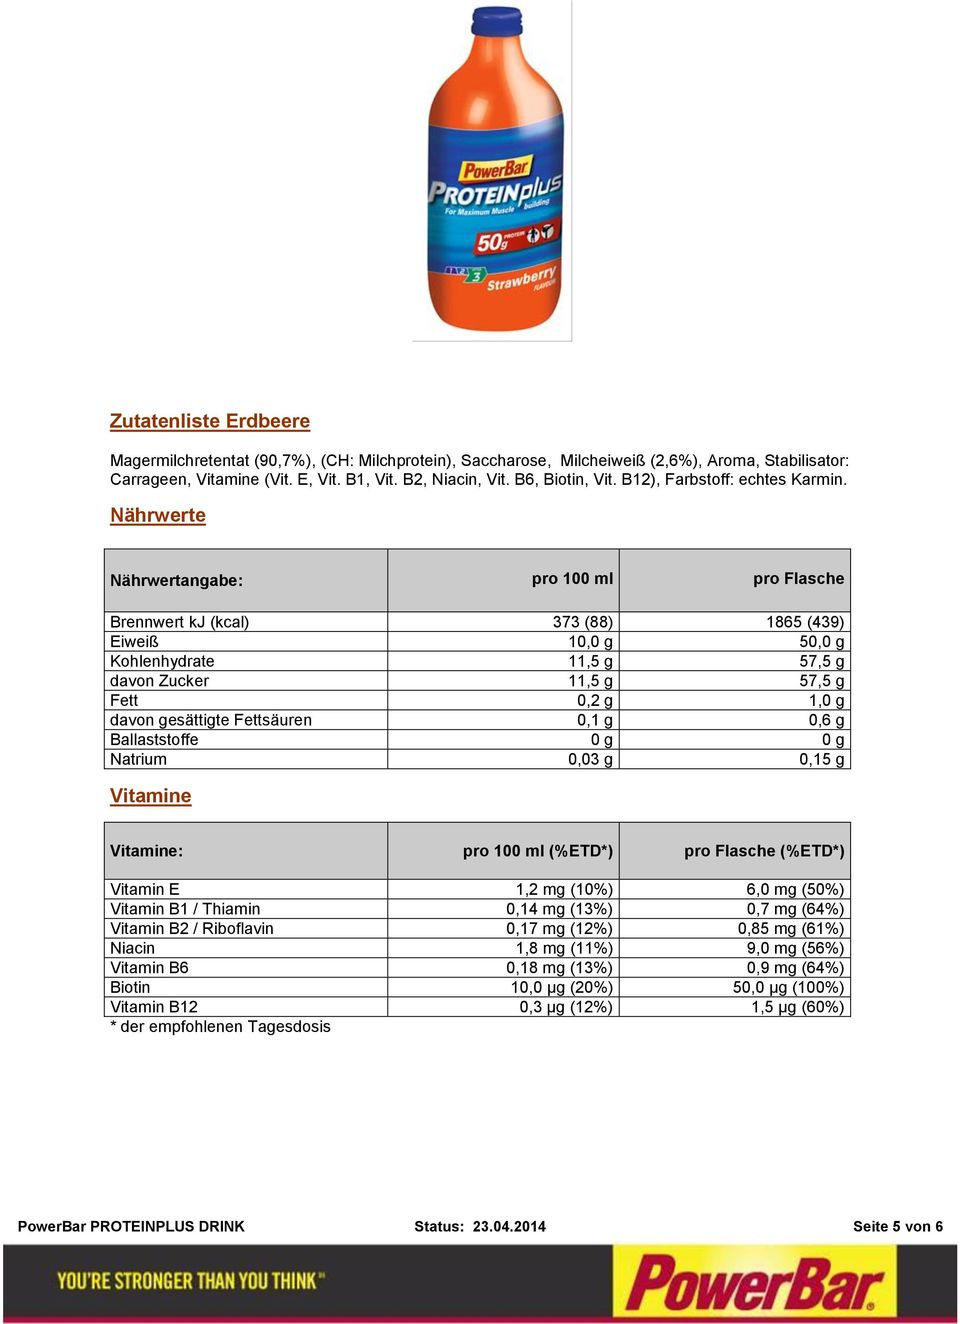 Nährwerte Nährwertangabe: pro 100 ml pro Flasche Brennwert kj (kcal) 373 (88) 1865 (439) Kohlenhydrate 11,5 g 57,5 g davon Zucker 11,5 g